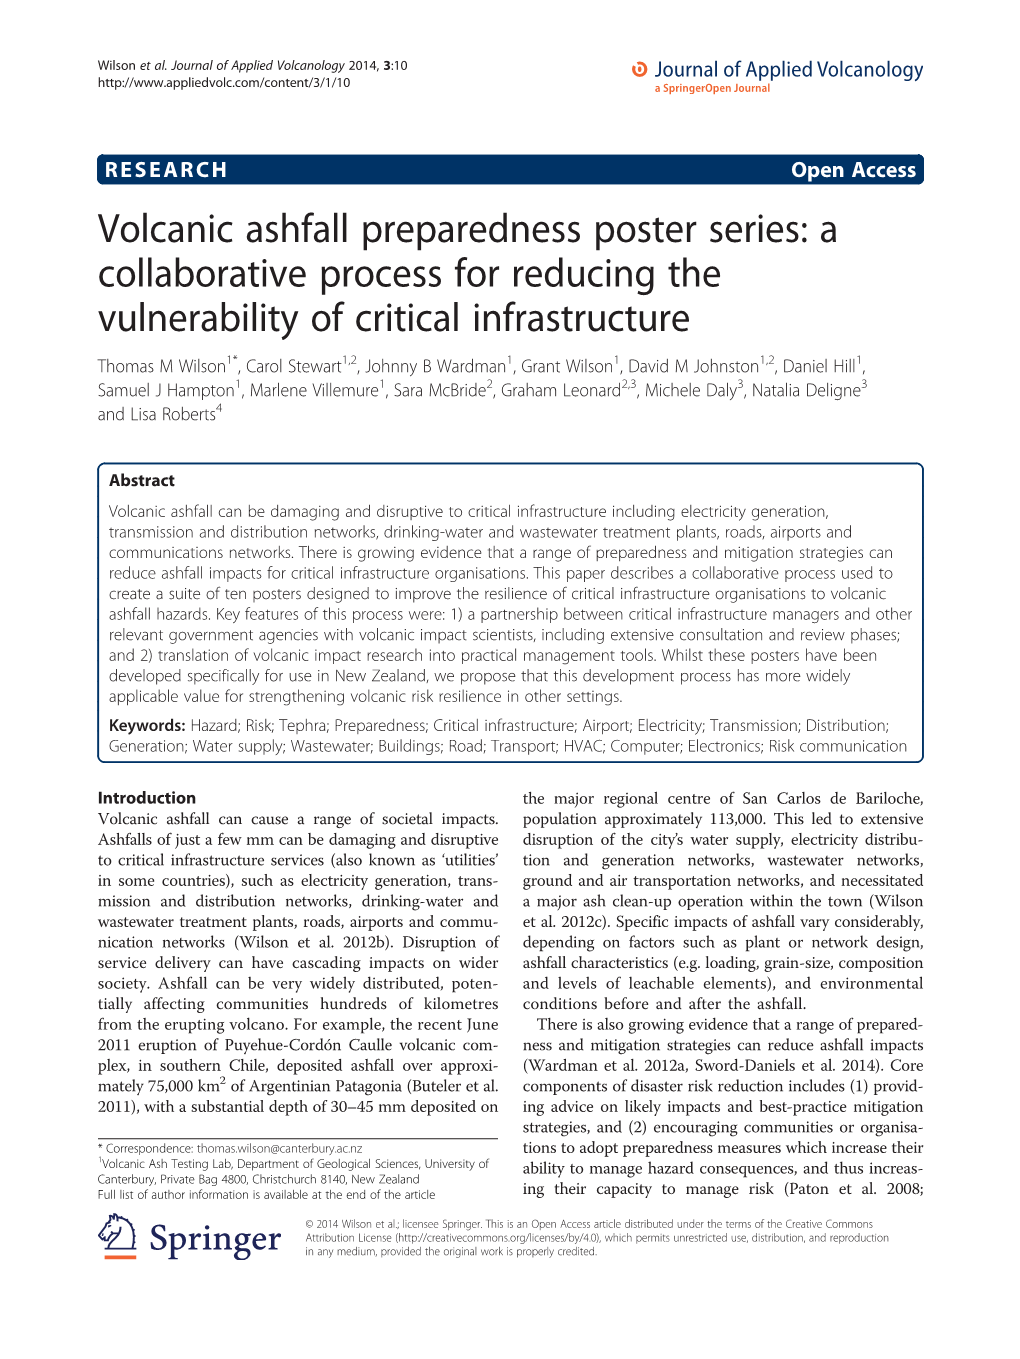 Volcanic Ashfall Preparedness Poster Series: a Collaborative Process For